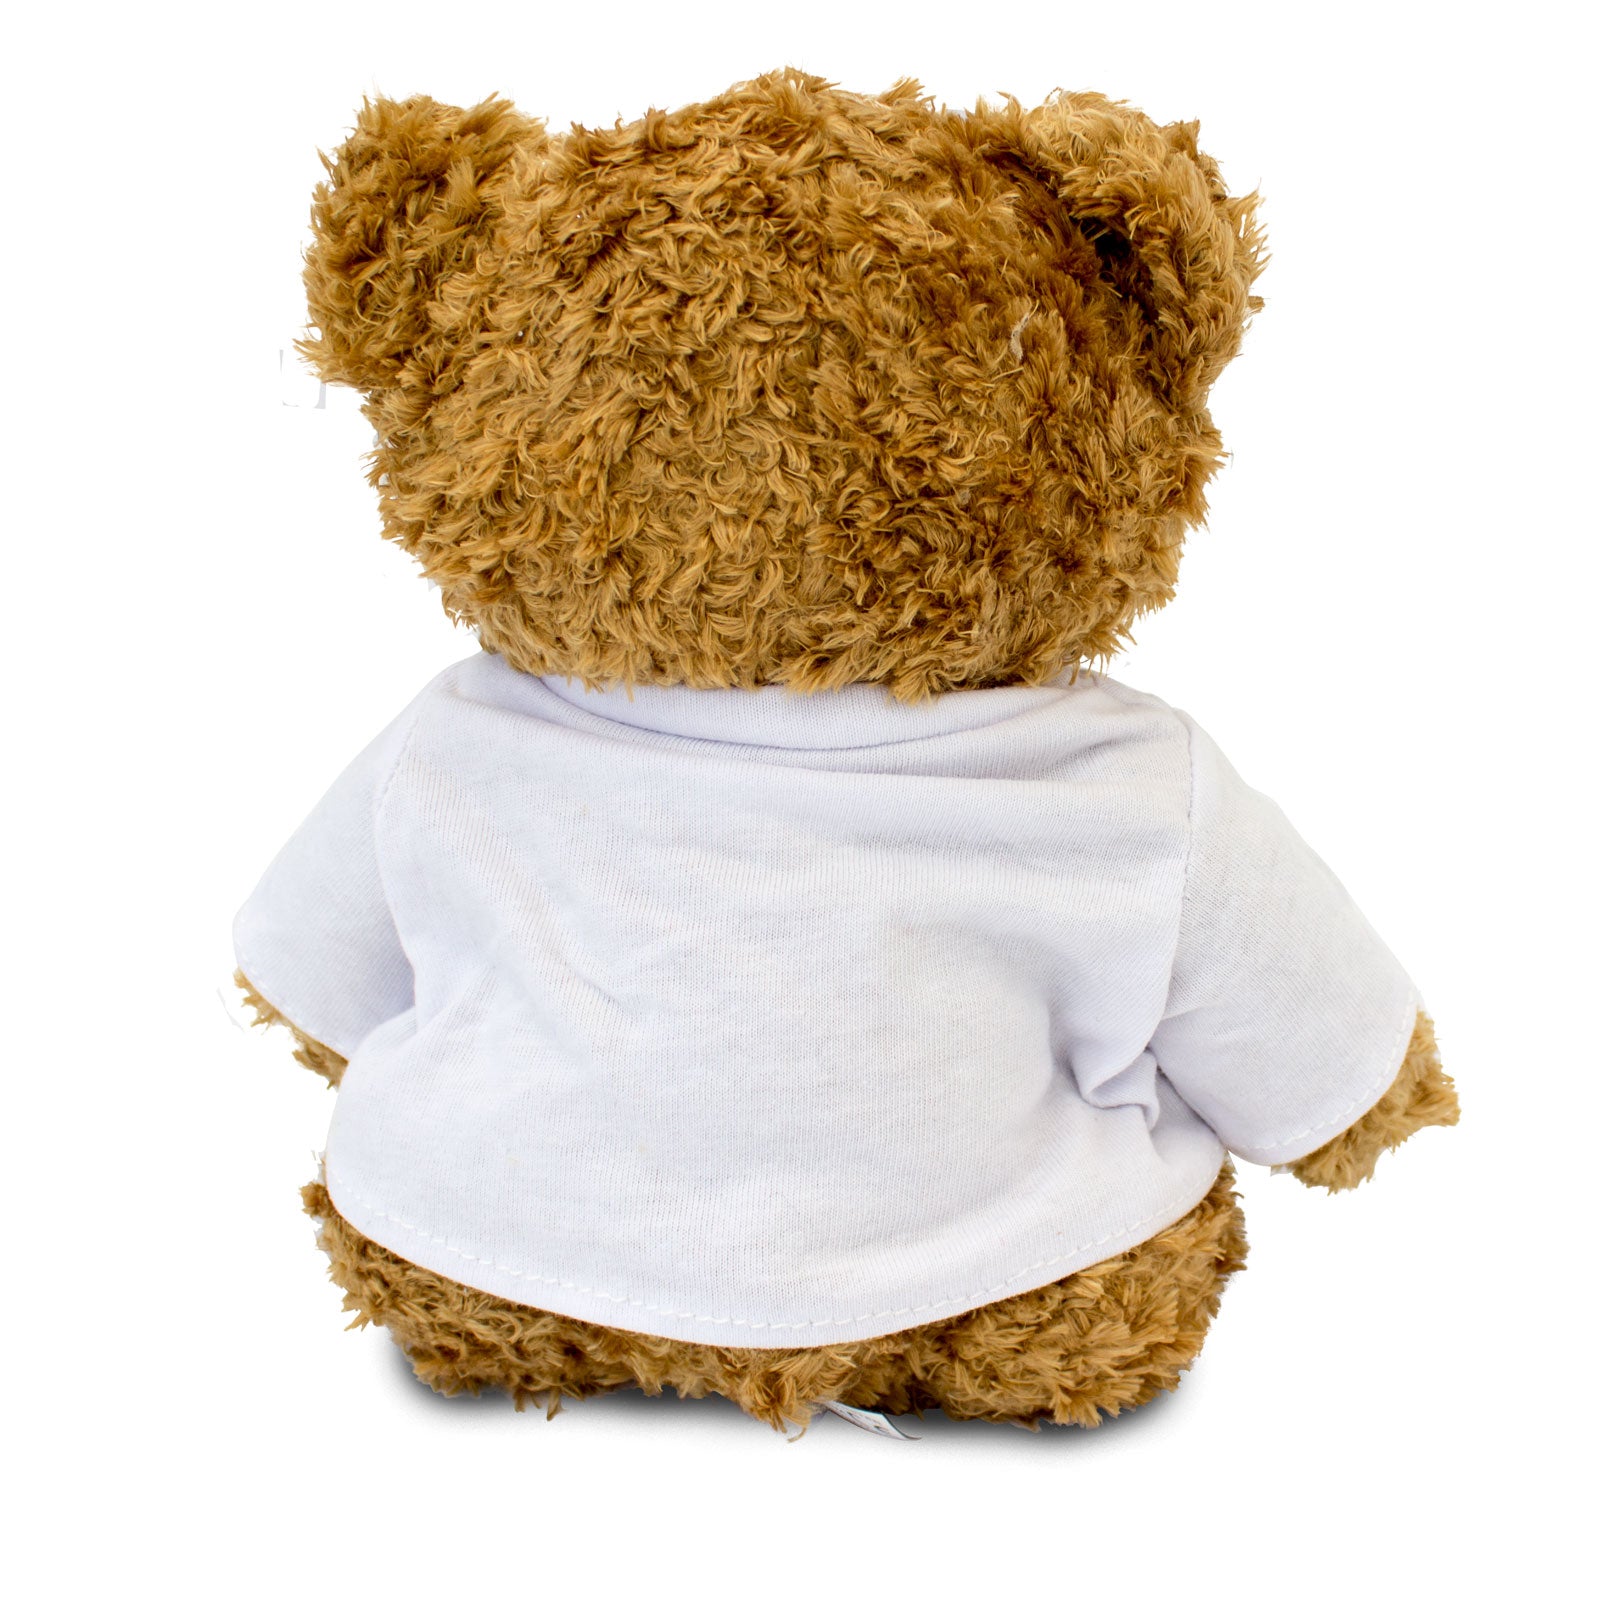 Get Well Soon Jorja - Teddy Bear